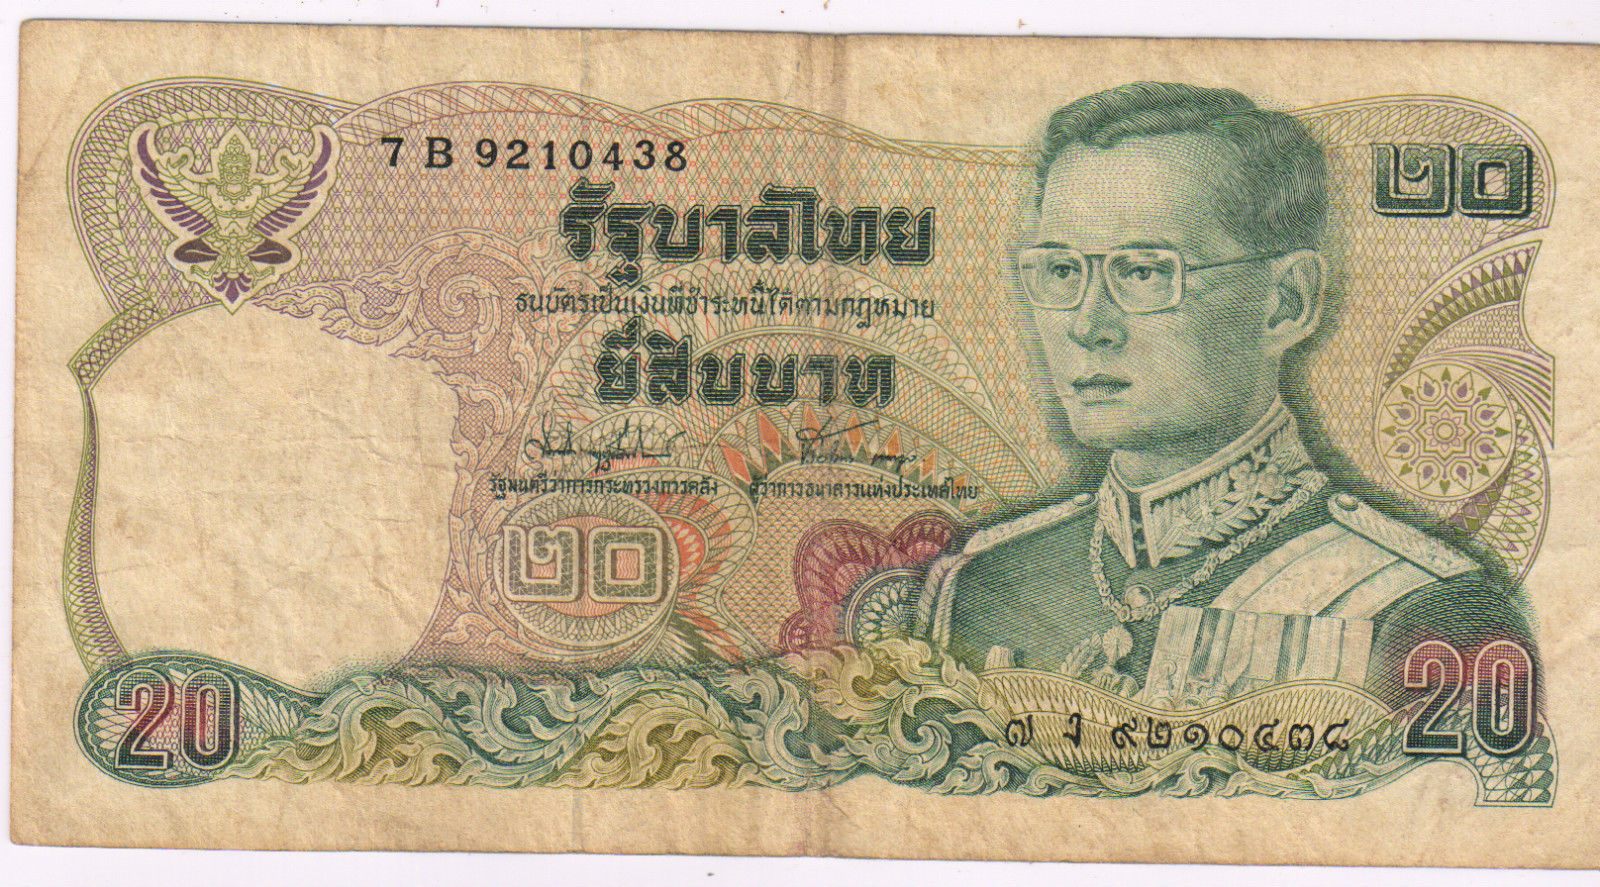 Thai baht to myr maybank